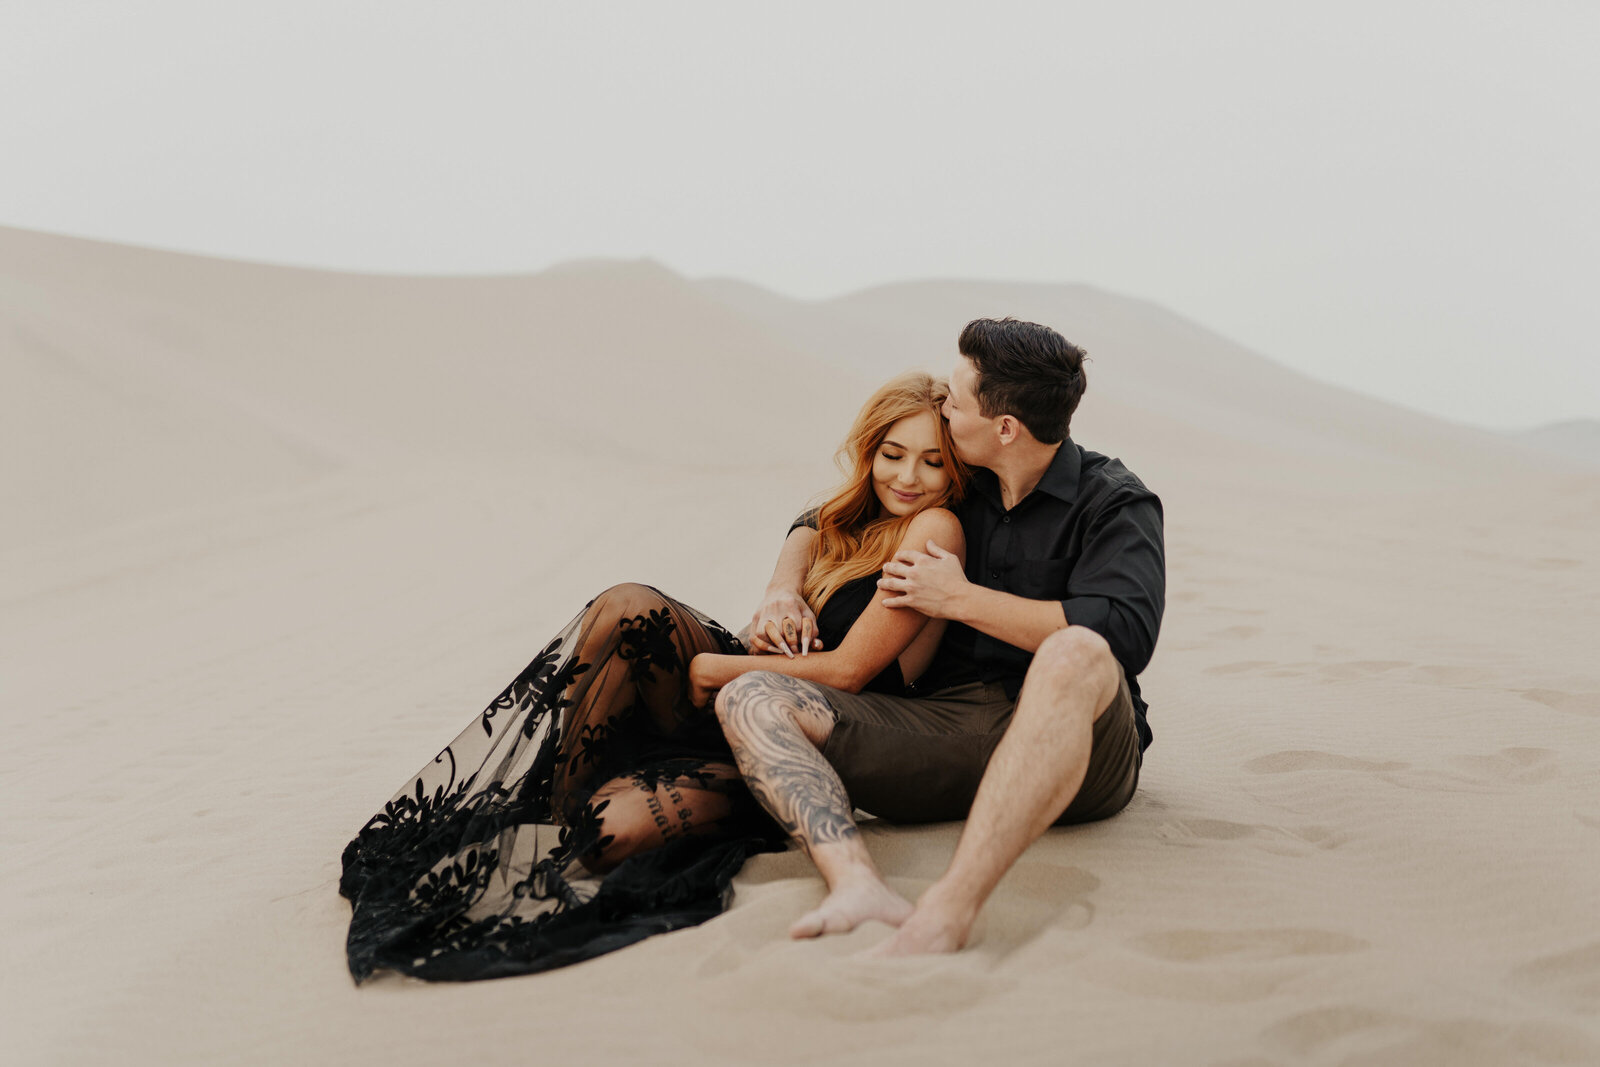 Sand Dunes Couples Photos - Raquel King Photography62